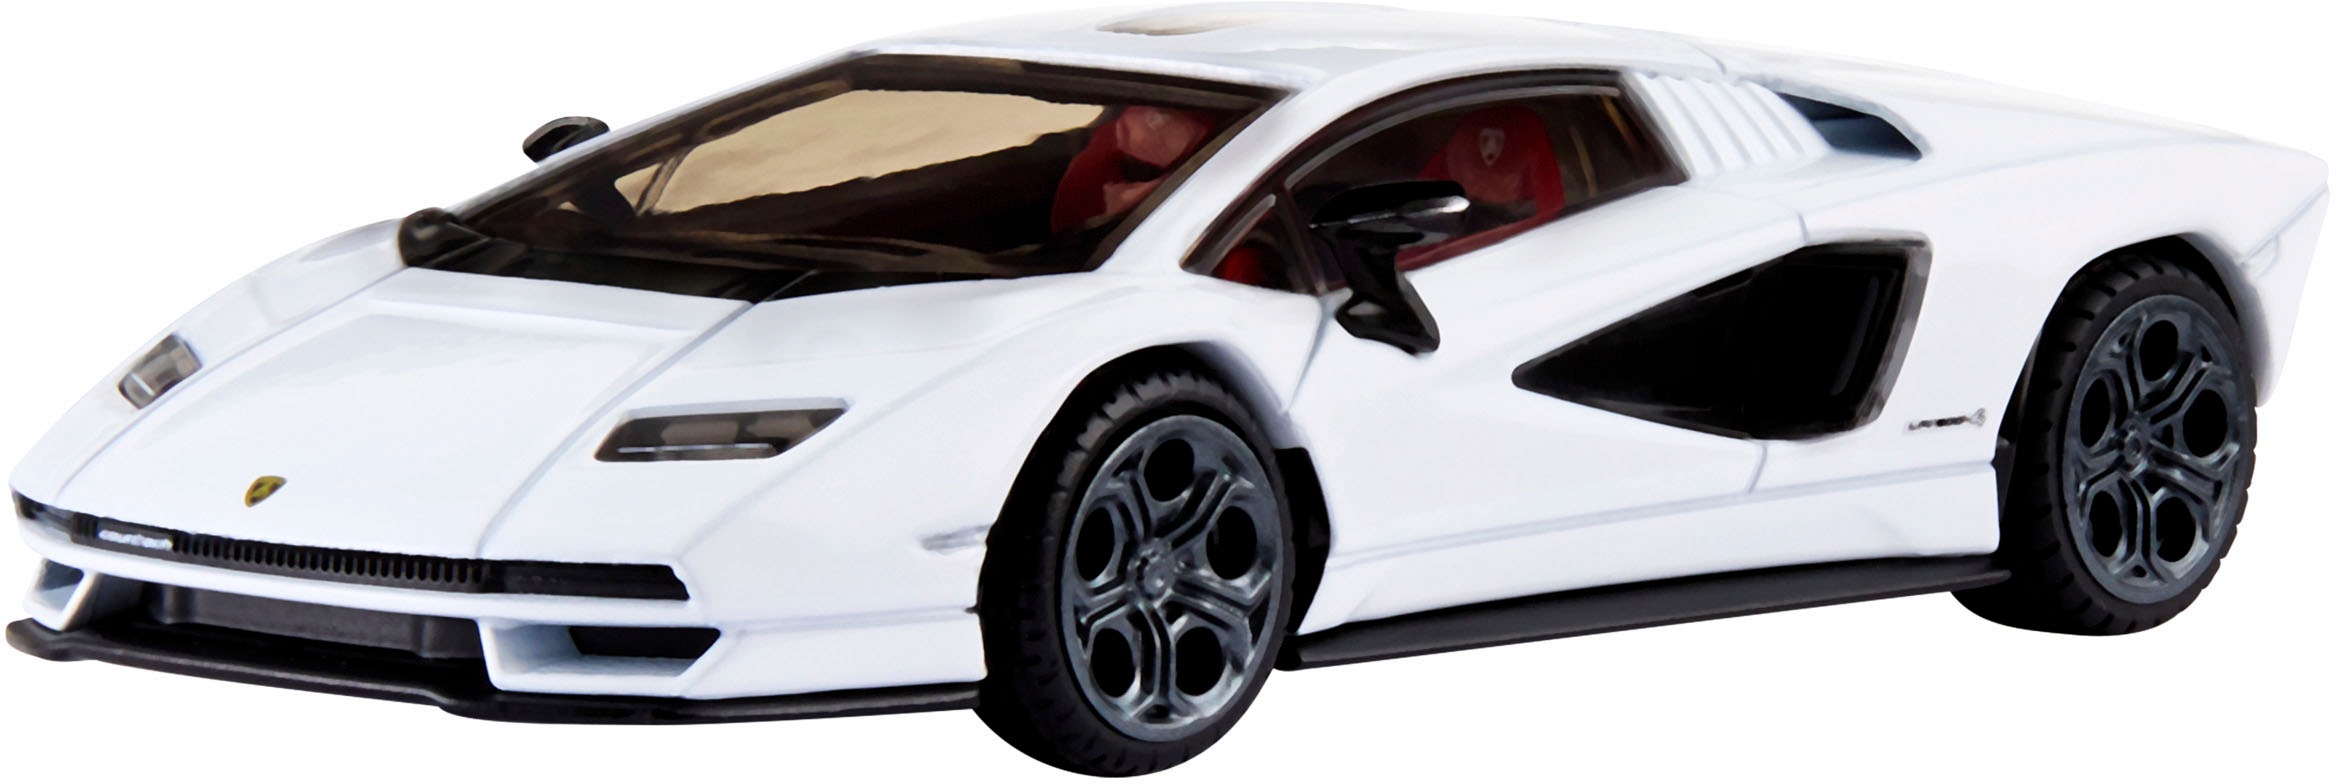 1:43« Lamborghini »Premium Wheels Hot bei Spielzeug-Auto